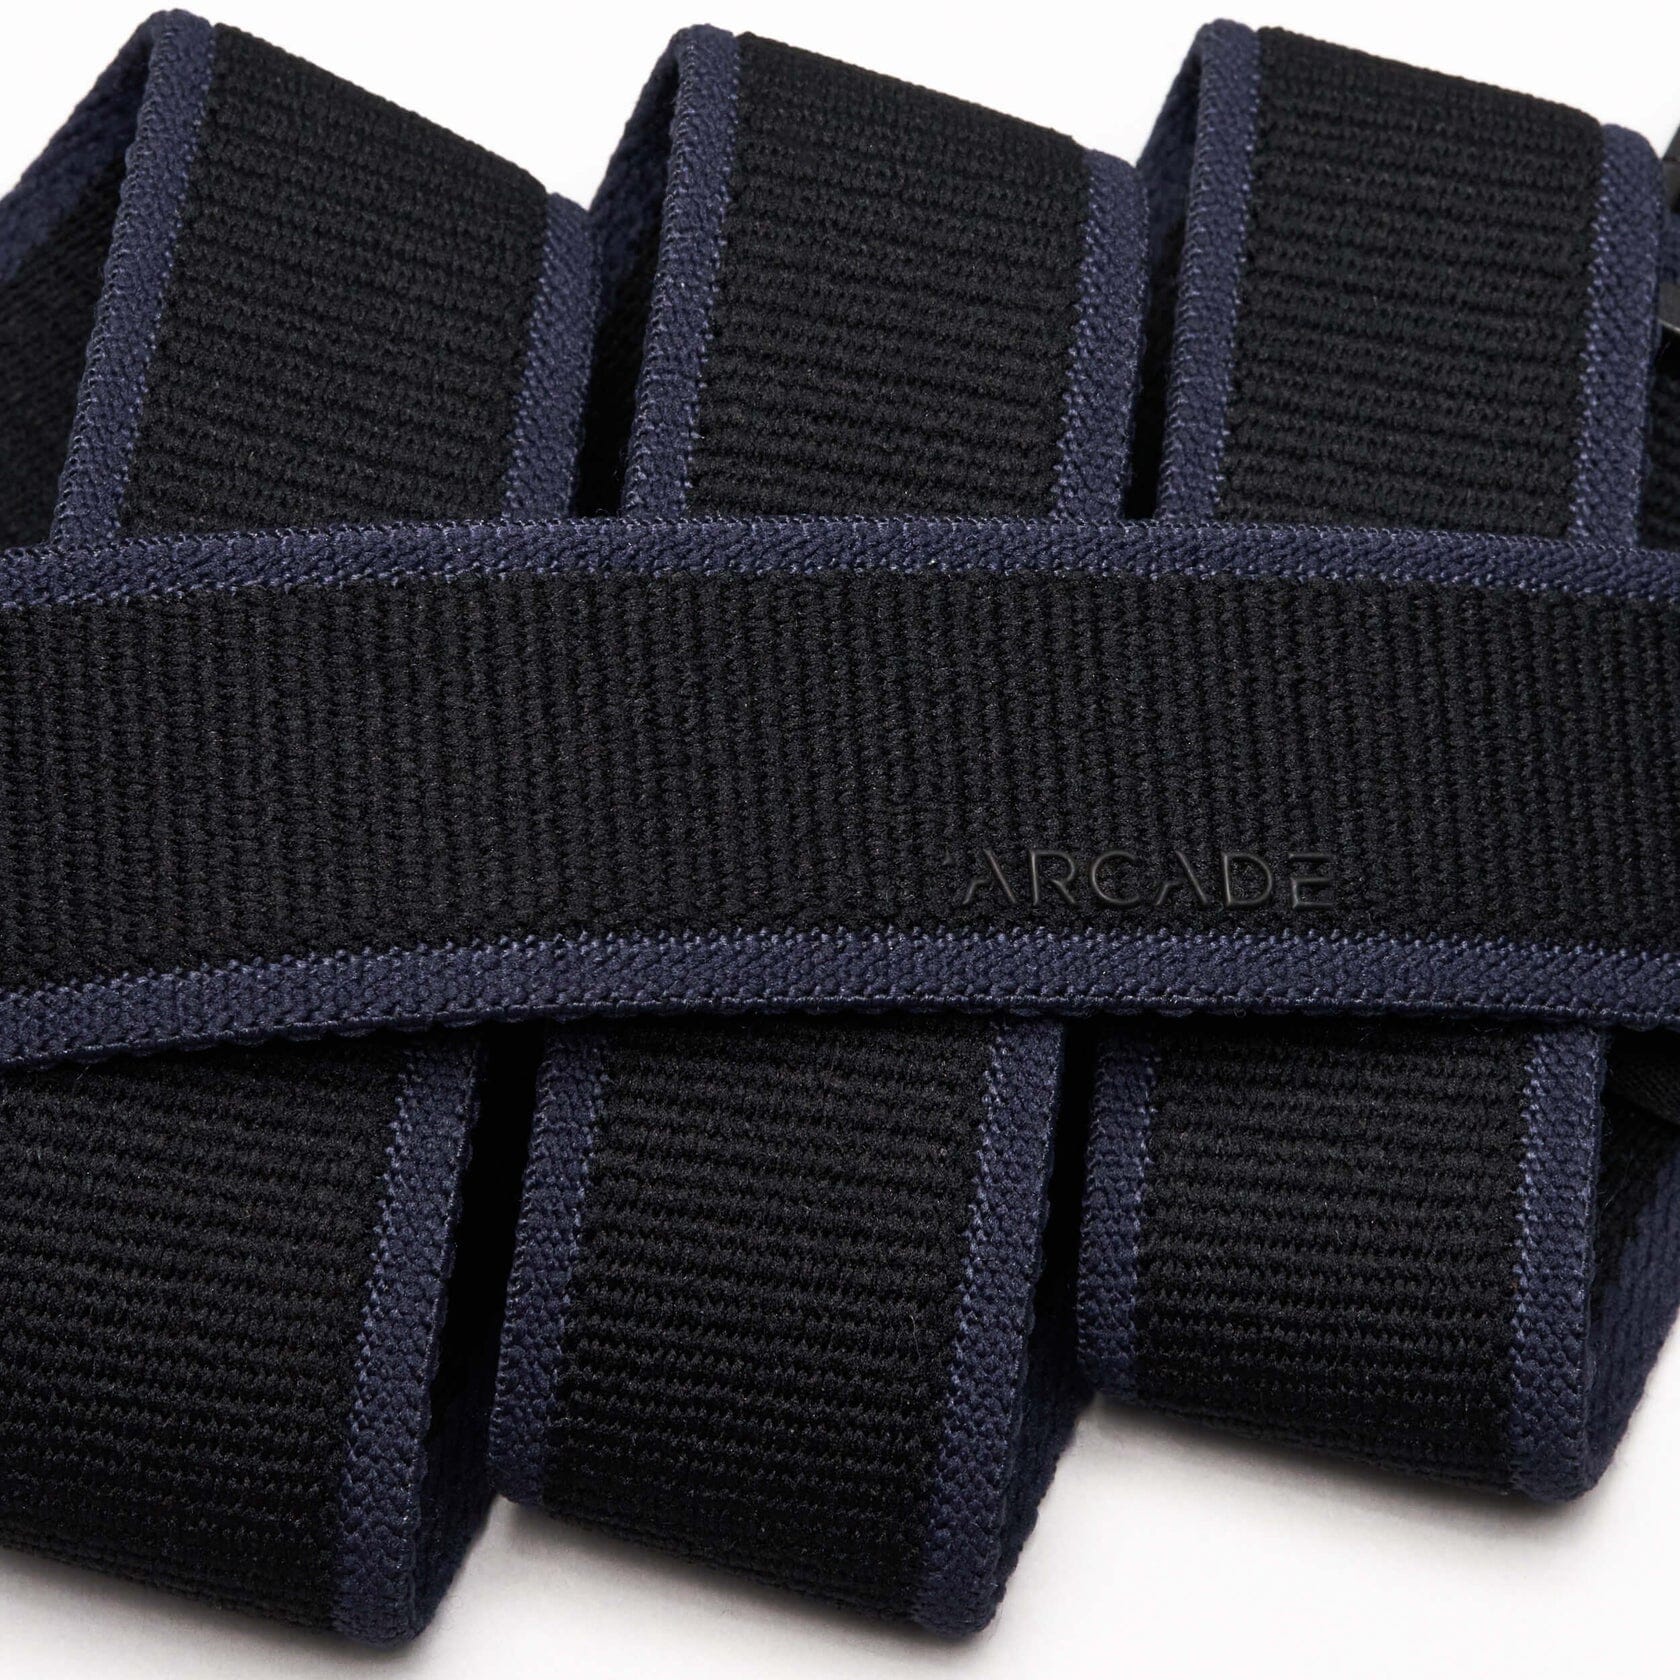 ARCADE Carto Slim Stretch Belt Black/Navy Women's Belts ARCADE 